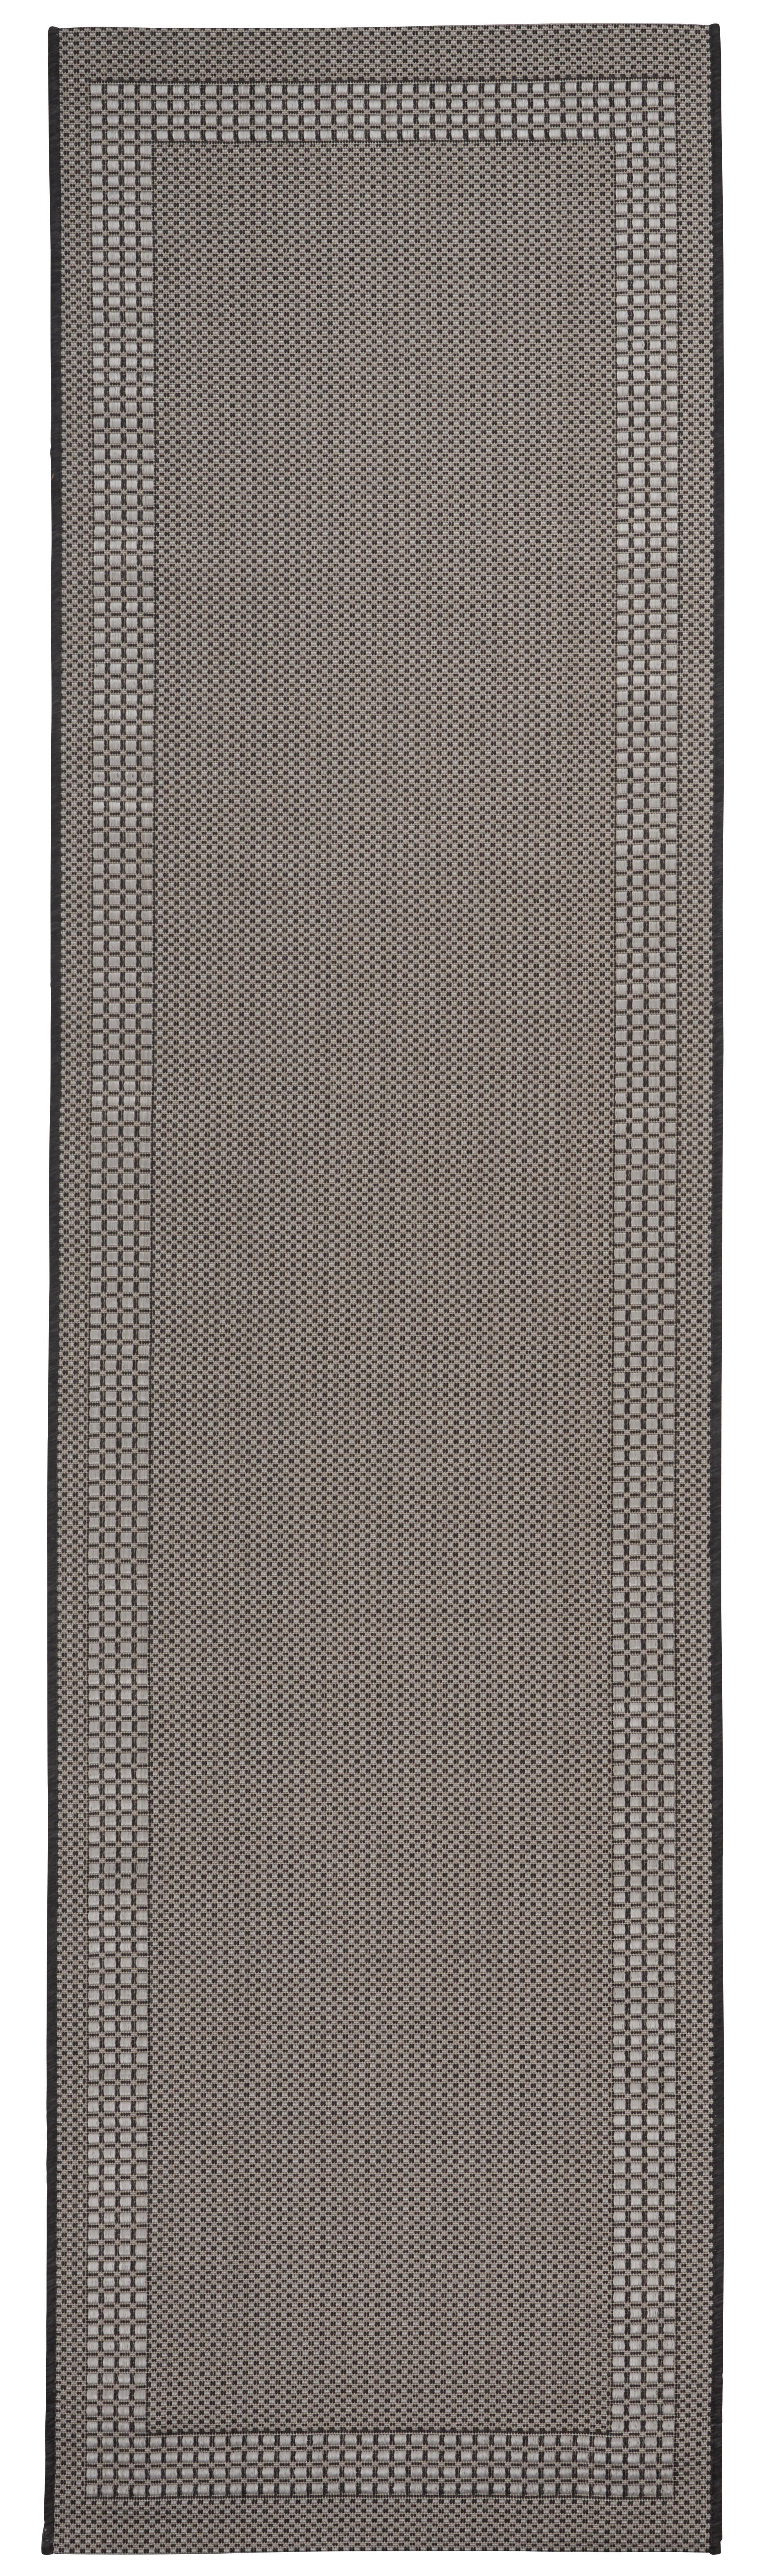 Ravno Tkana Preproga Naomi 2 -Akt- - antracit, Konvencionalno, tekstil (80/290cm) - Modern Living